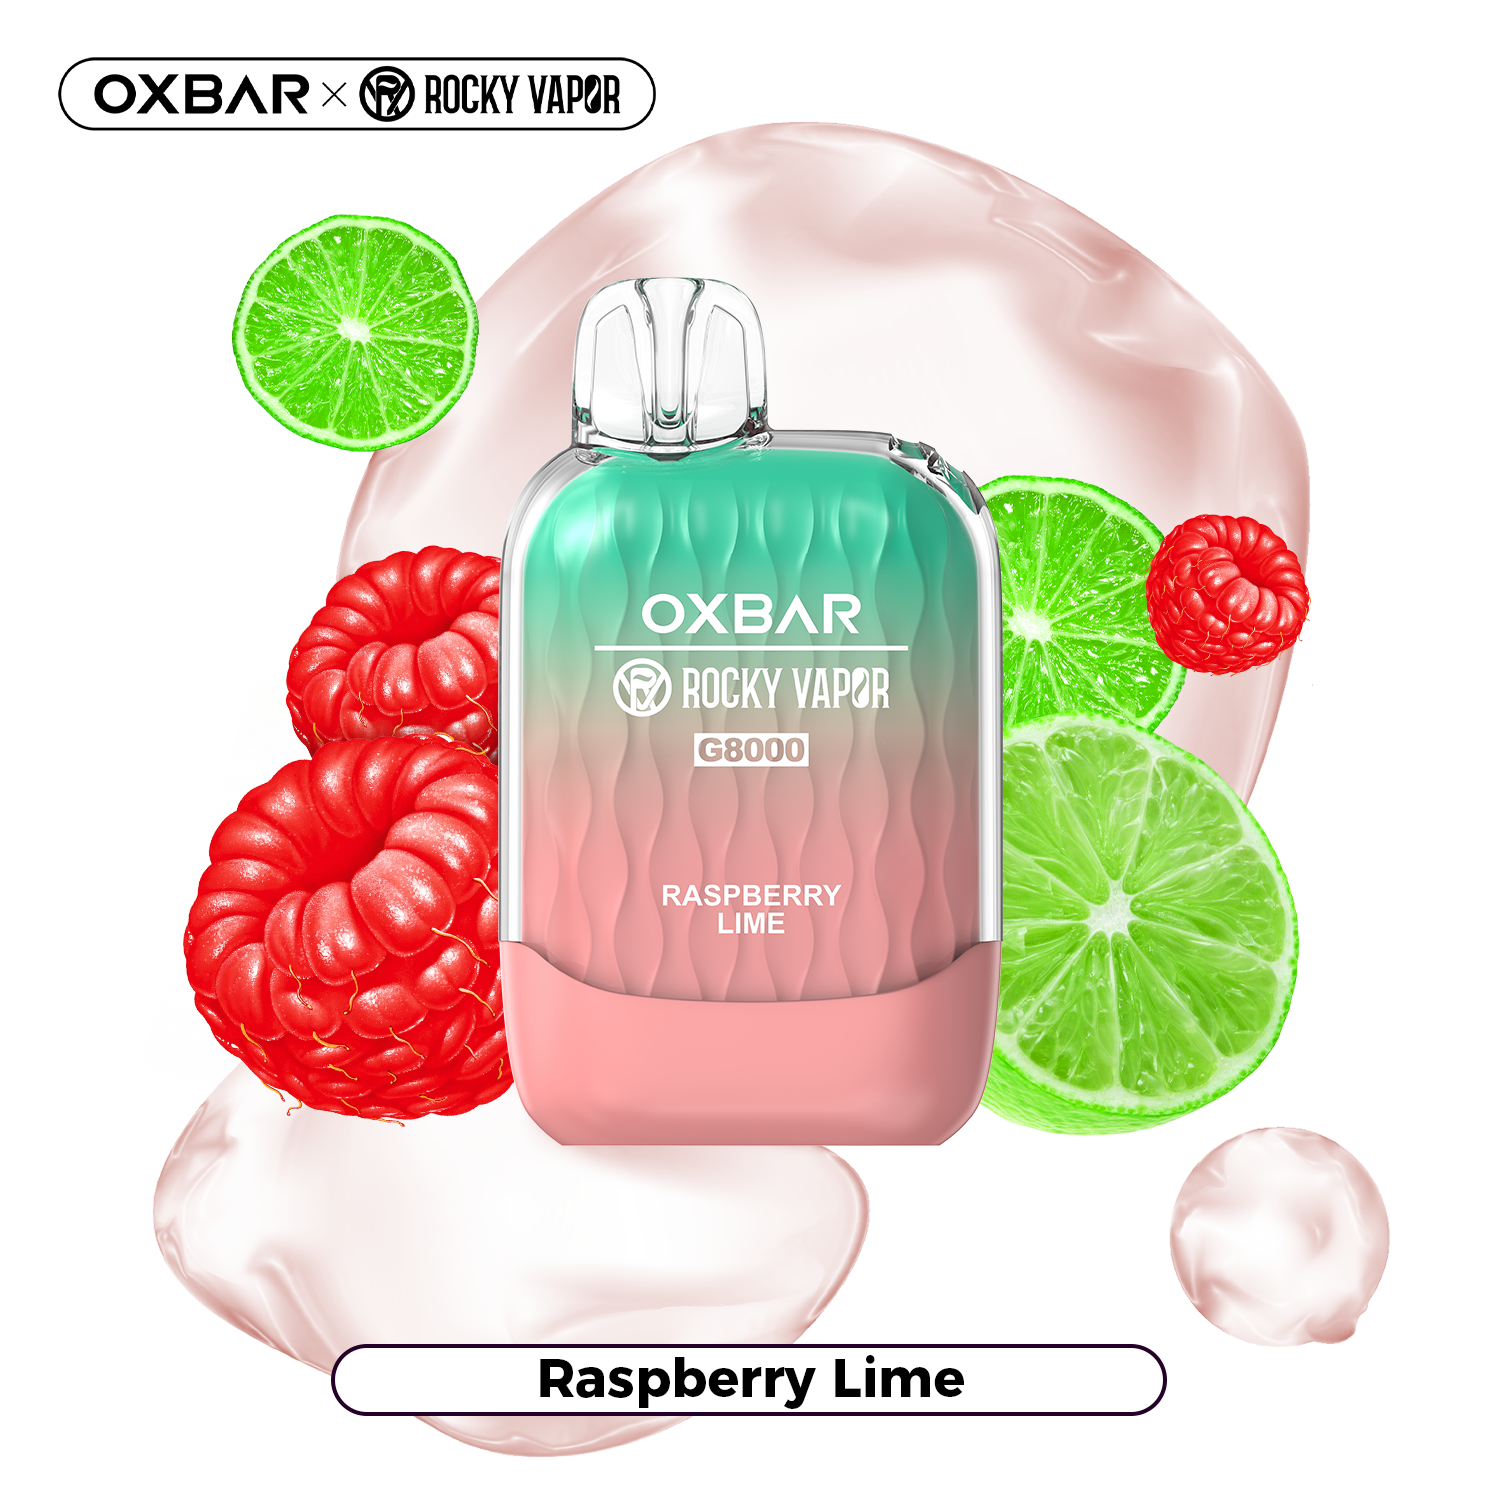 Raspberry Lime - OXBAR G8000 - 20mg - 5pc/box